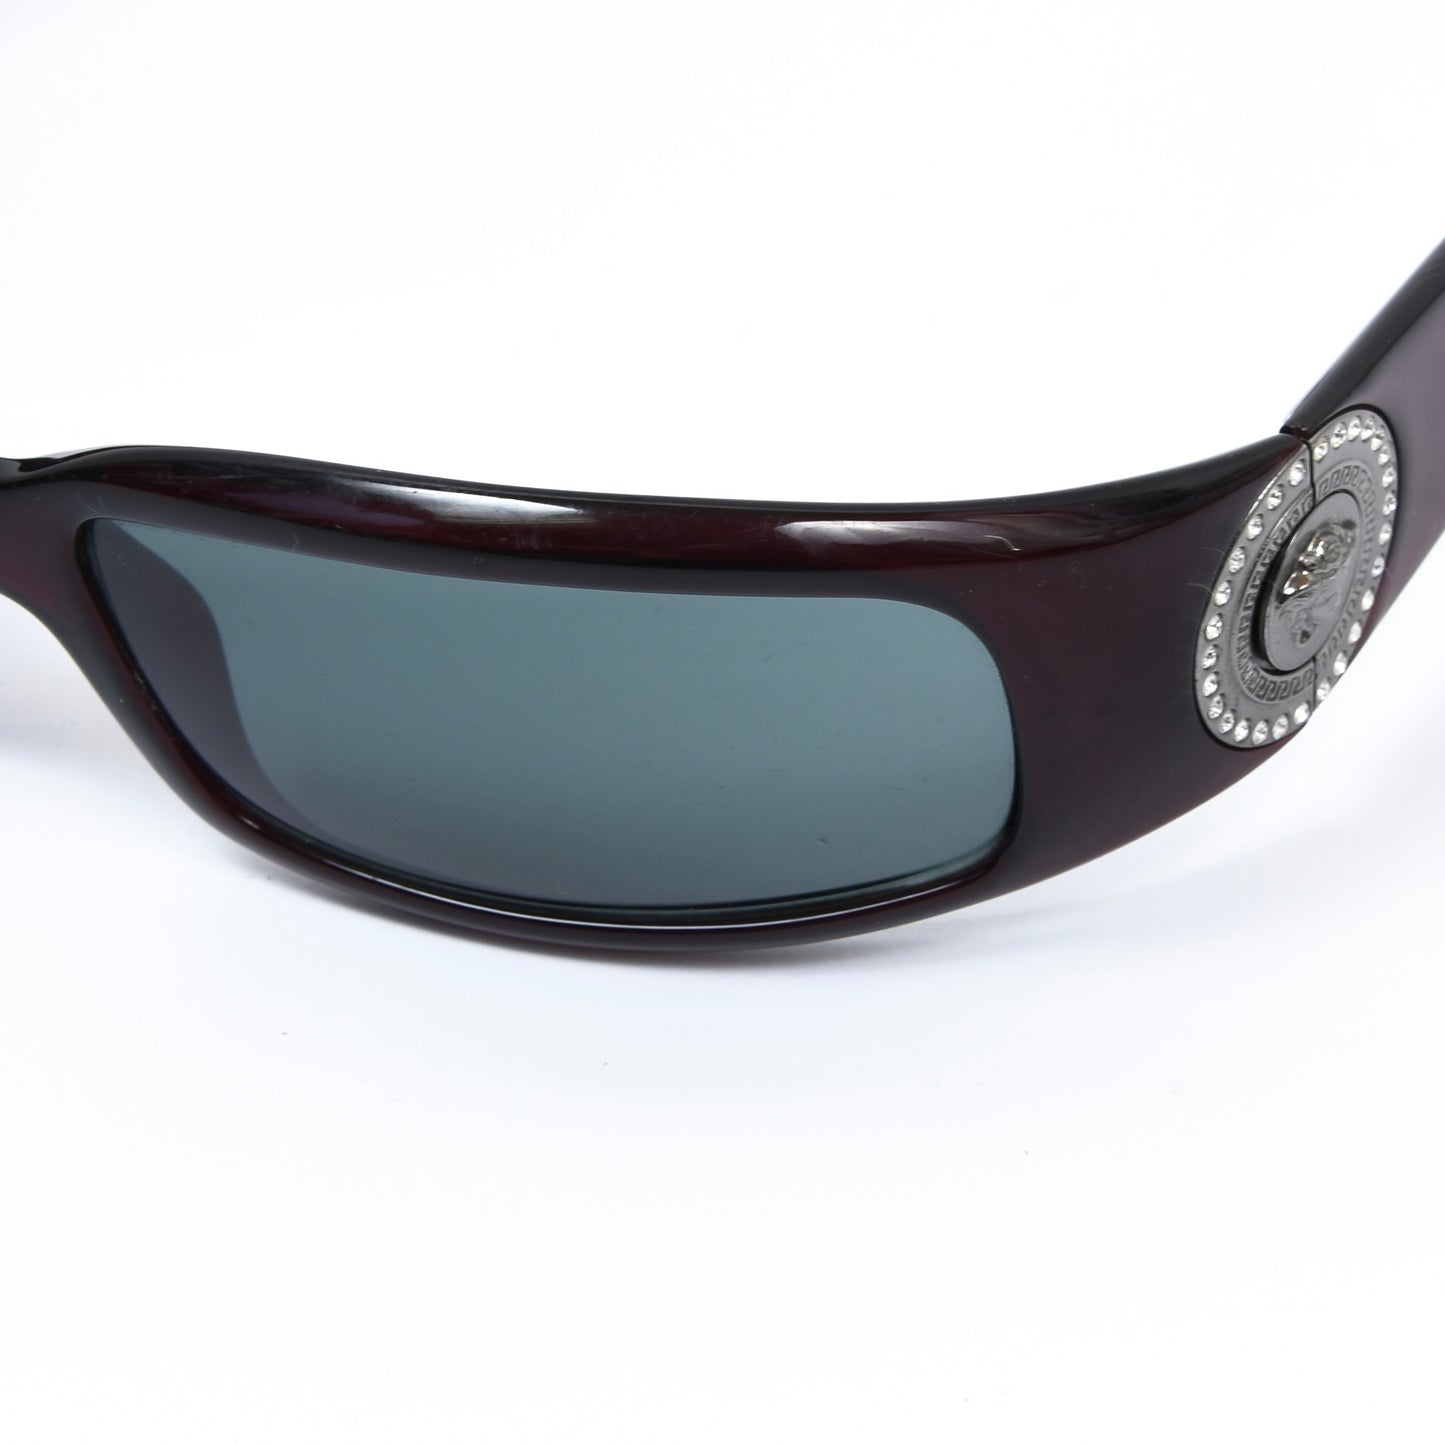 Versace Sunglasses Mod. 4044-B - Dark Red